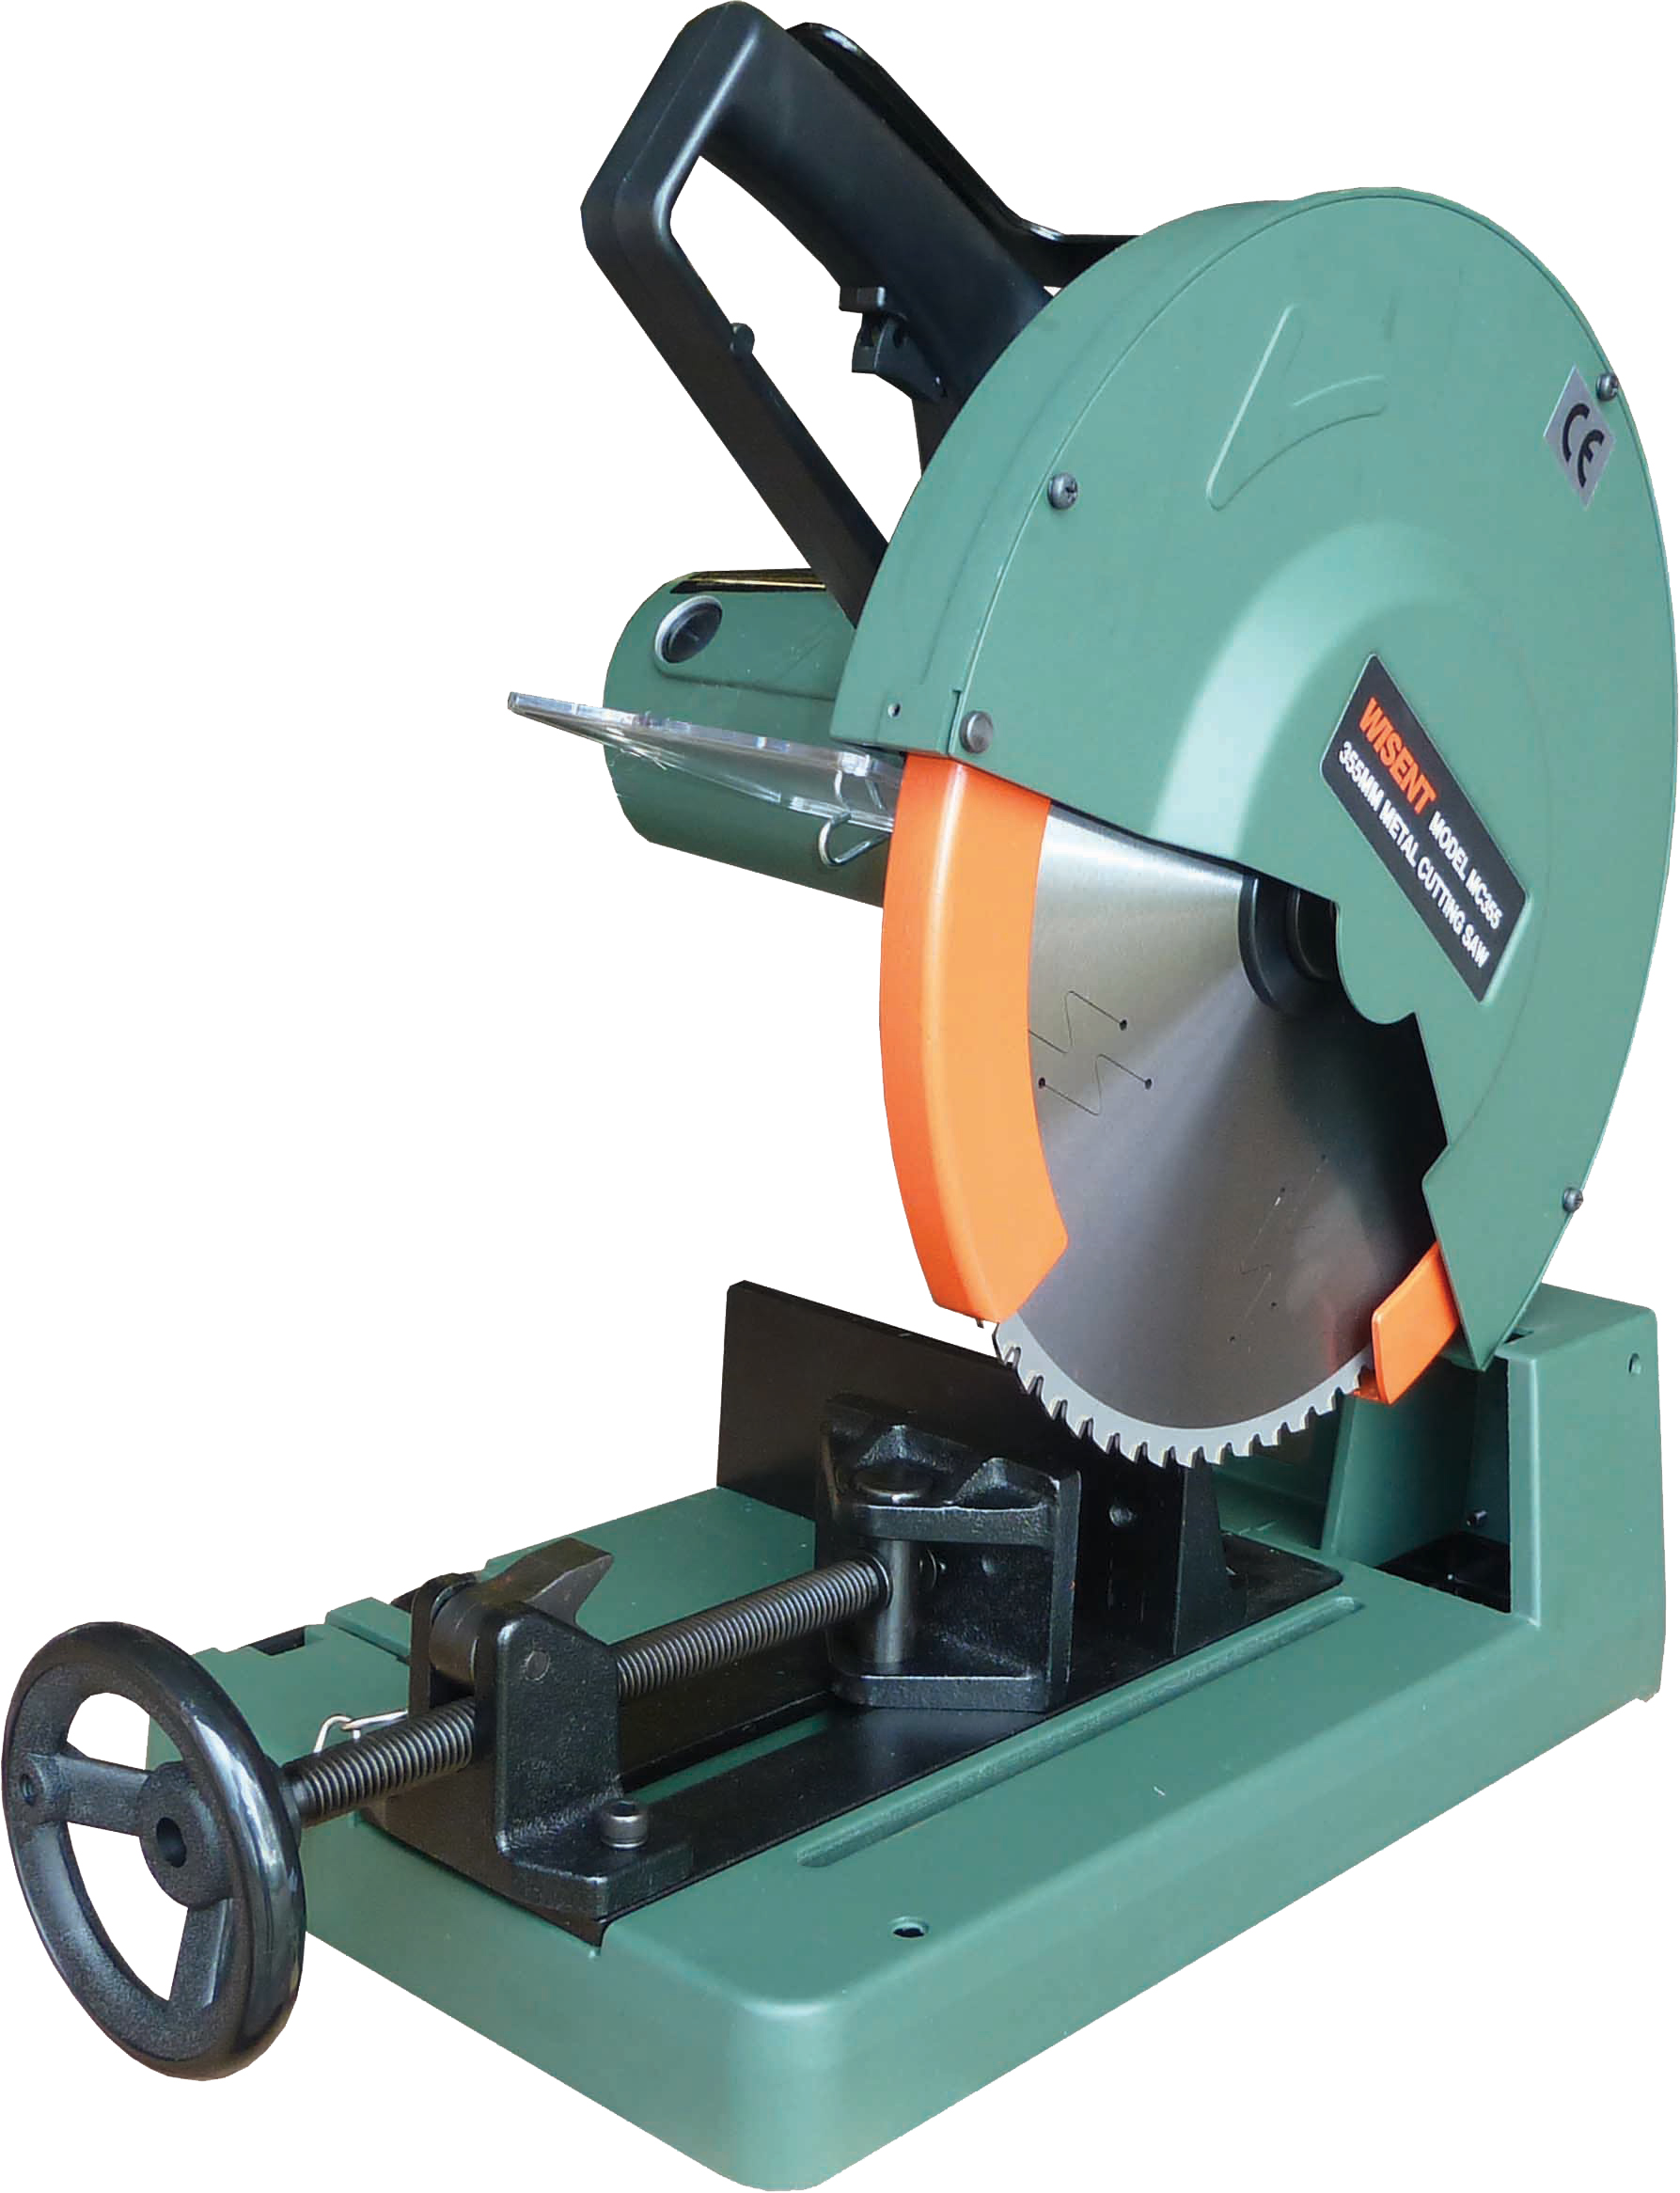 Wisent MC355 metal circular saw Machine